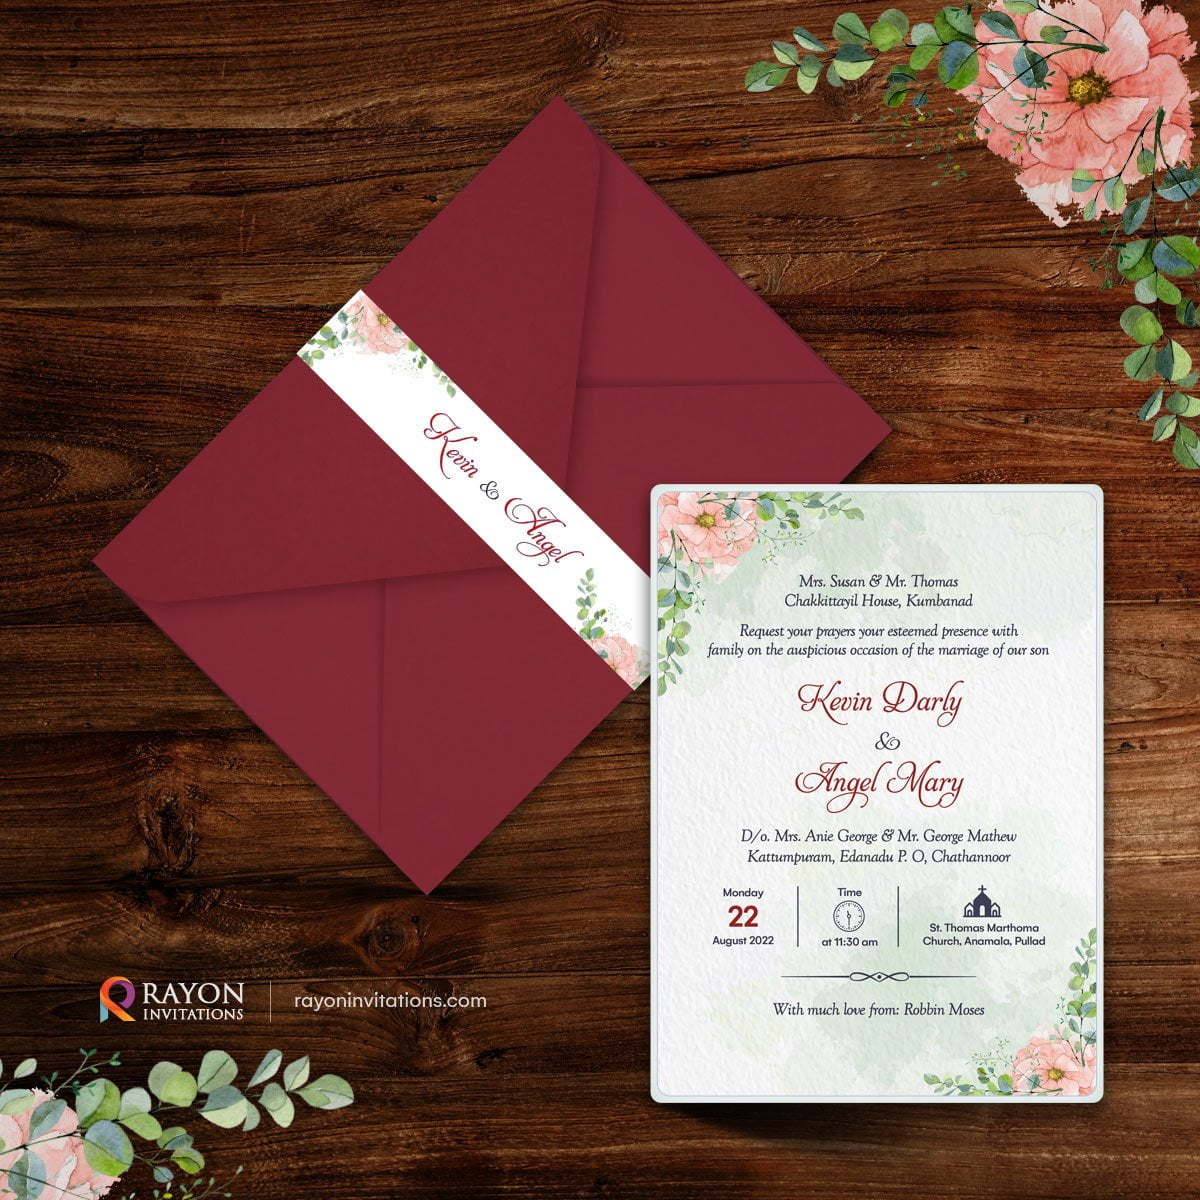 Wedding Invitation Cards in Chennai